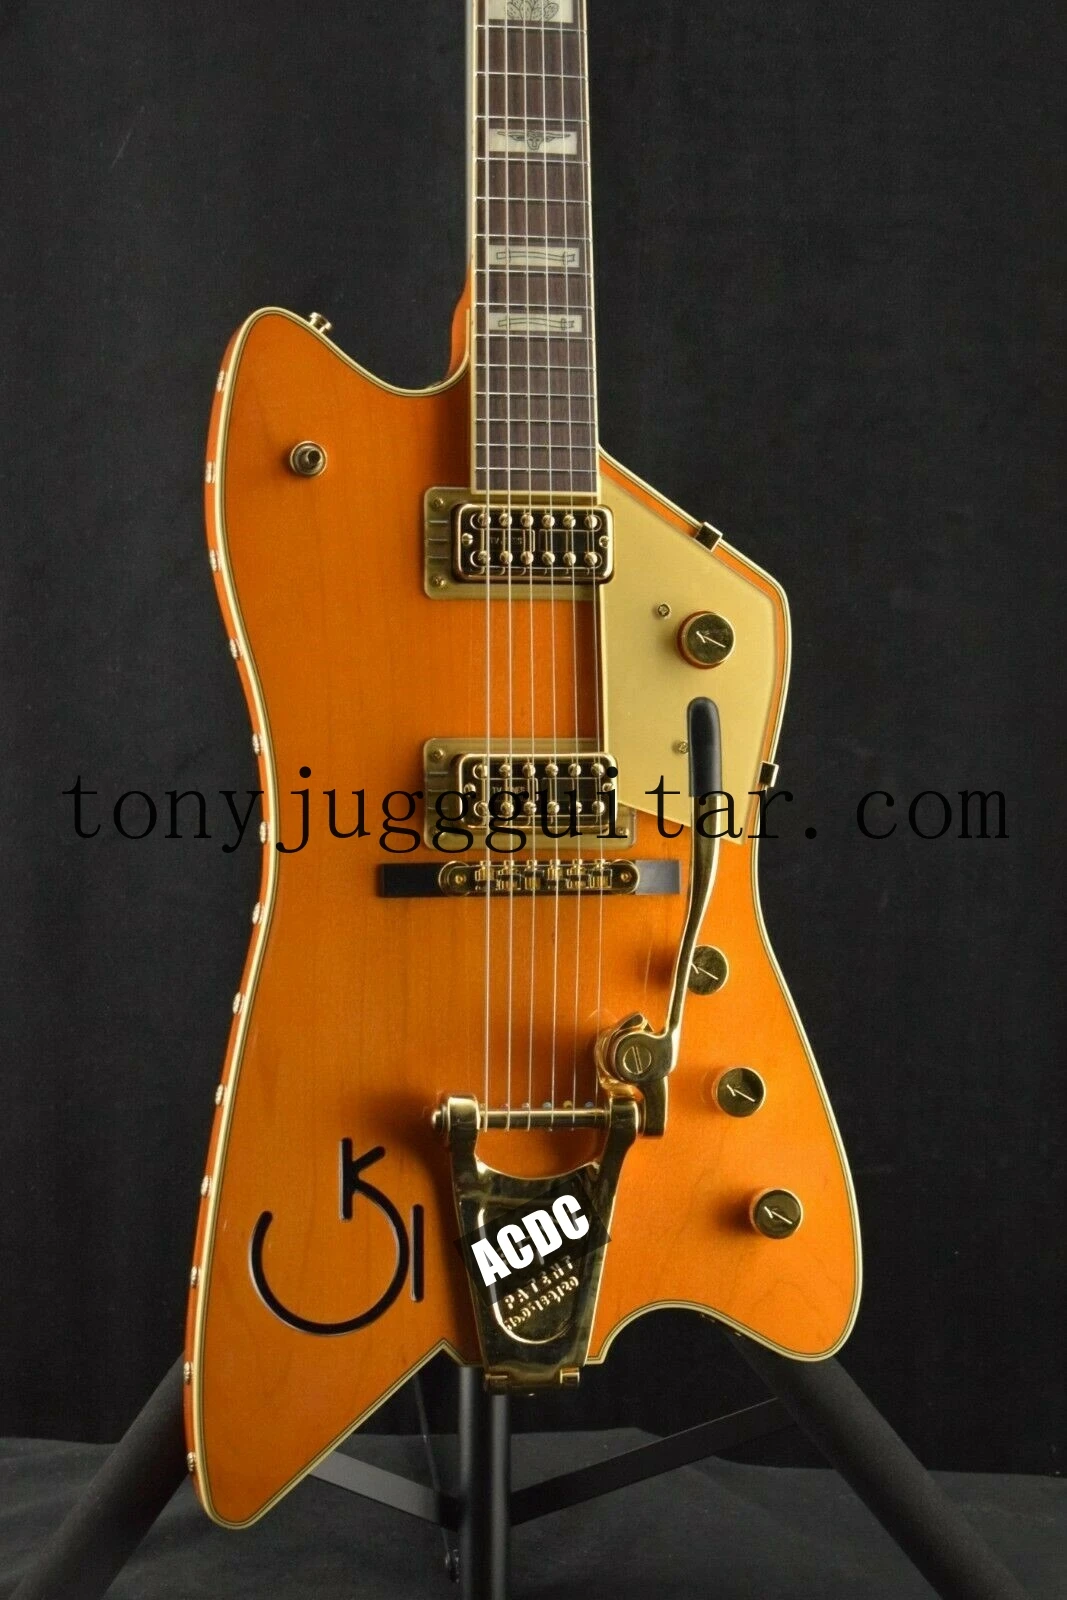 

Billy Bo Jupiter Orange Eddie Cochran Fire Thunderbird Electric Guitar Original G logo Knobs, Bigs Tremolo Bridge, Gold Hardware